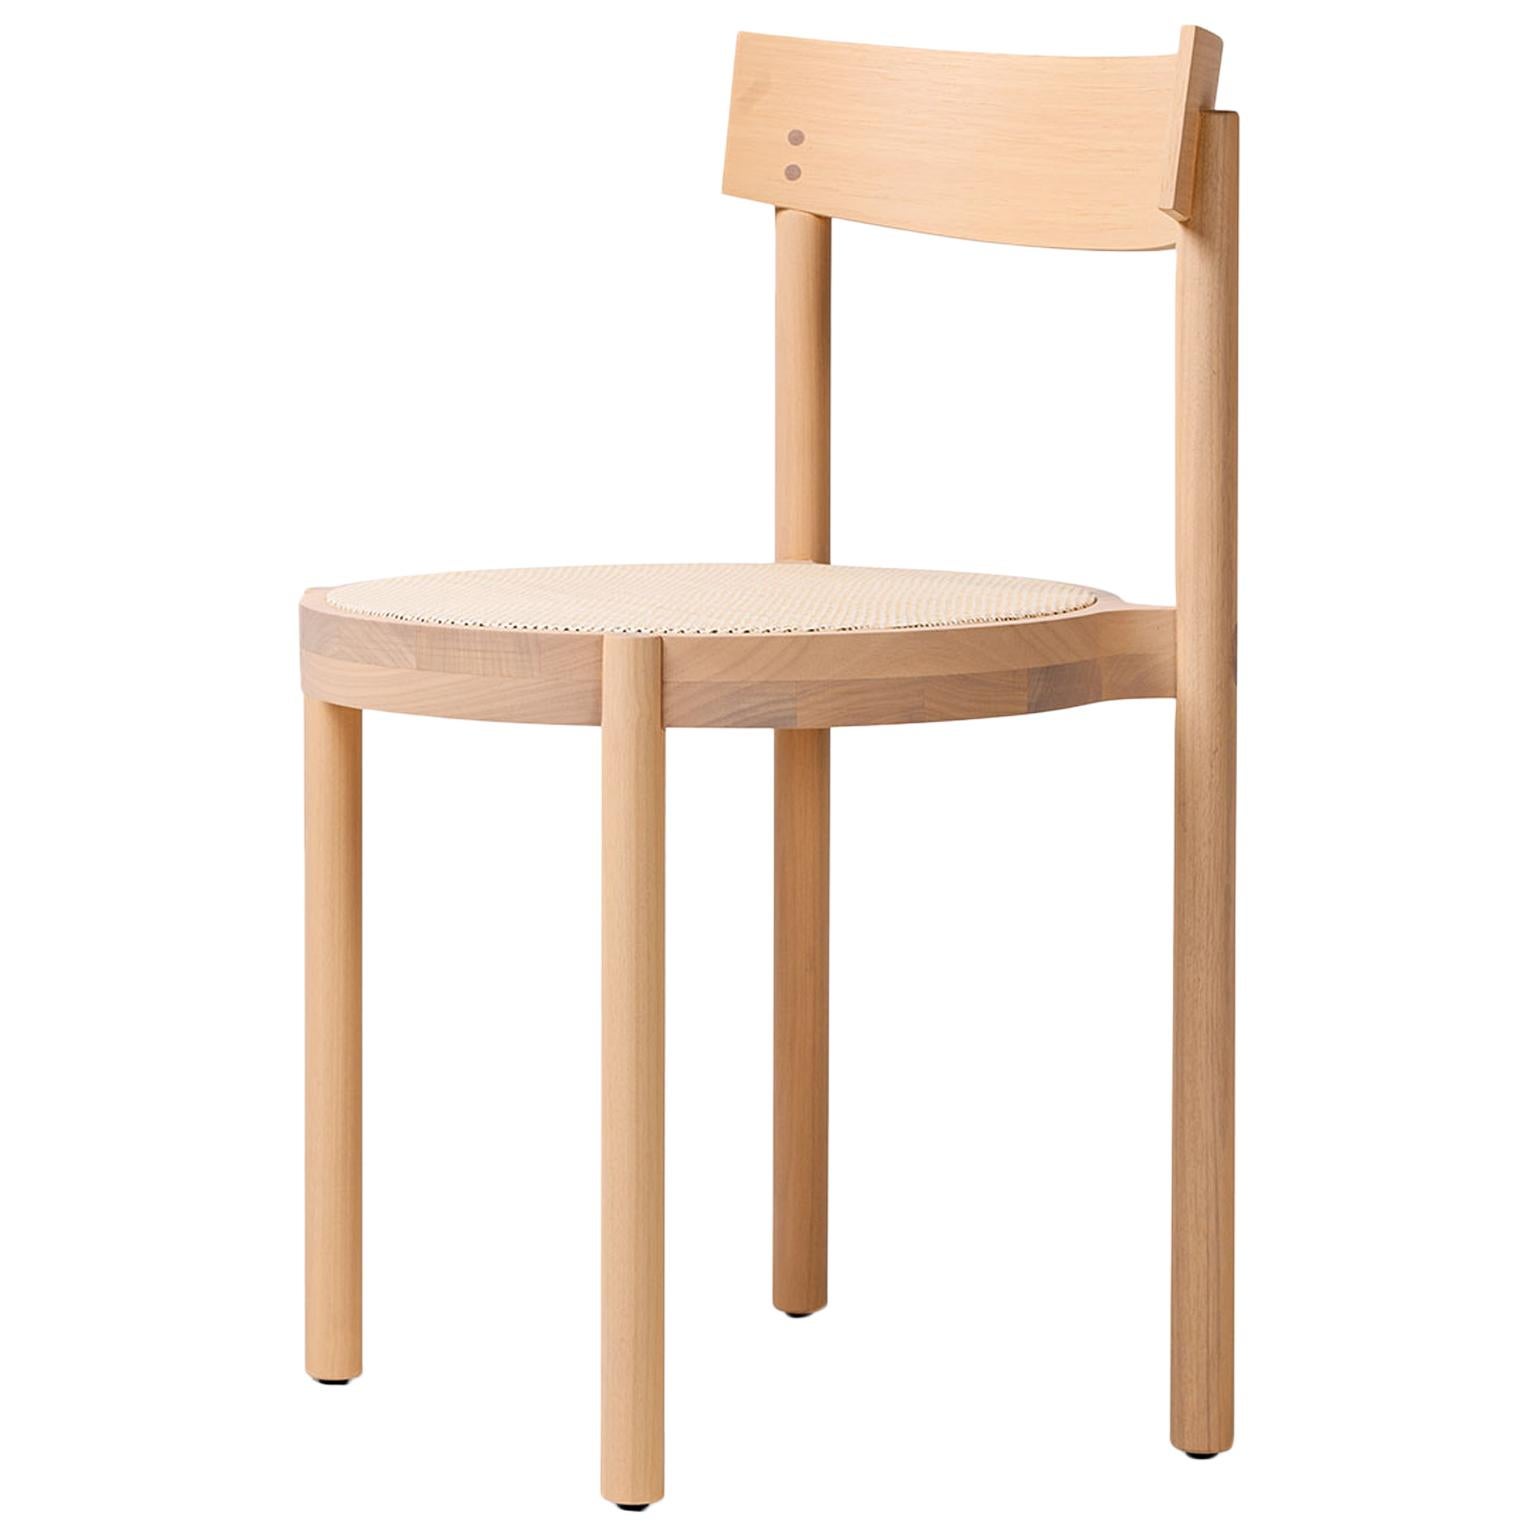 Gravatá Chair in Bleached Tauari Wood by Wentz, Brazilian Contemporary Design